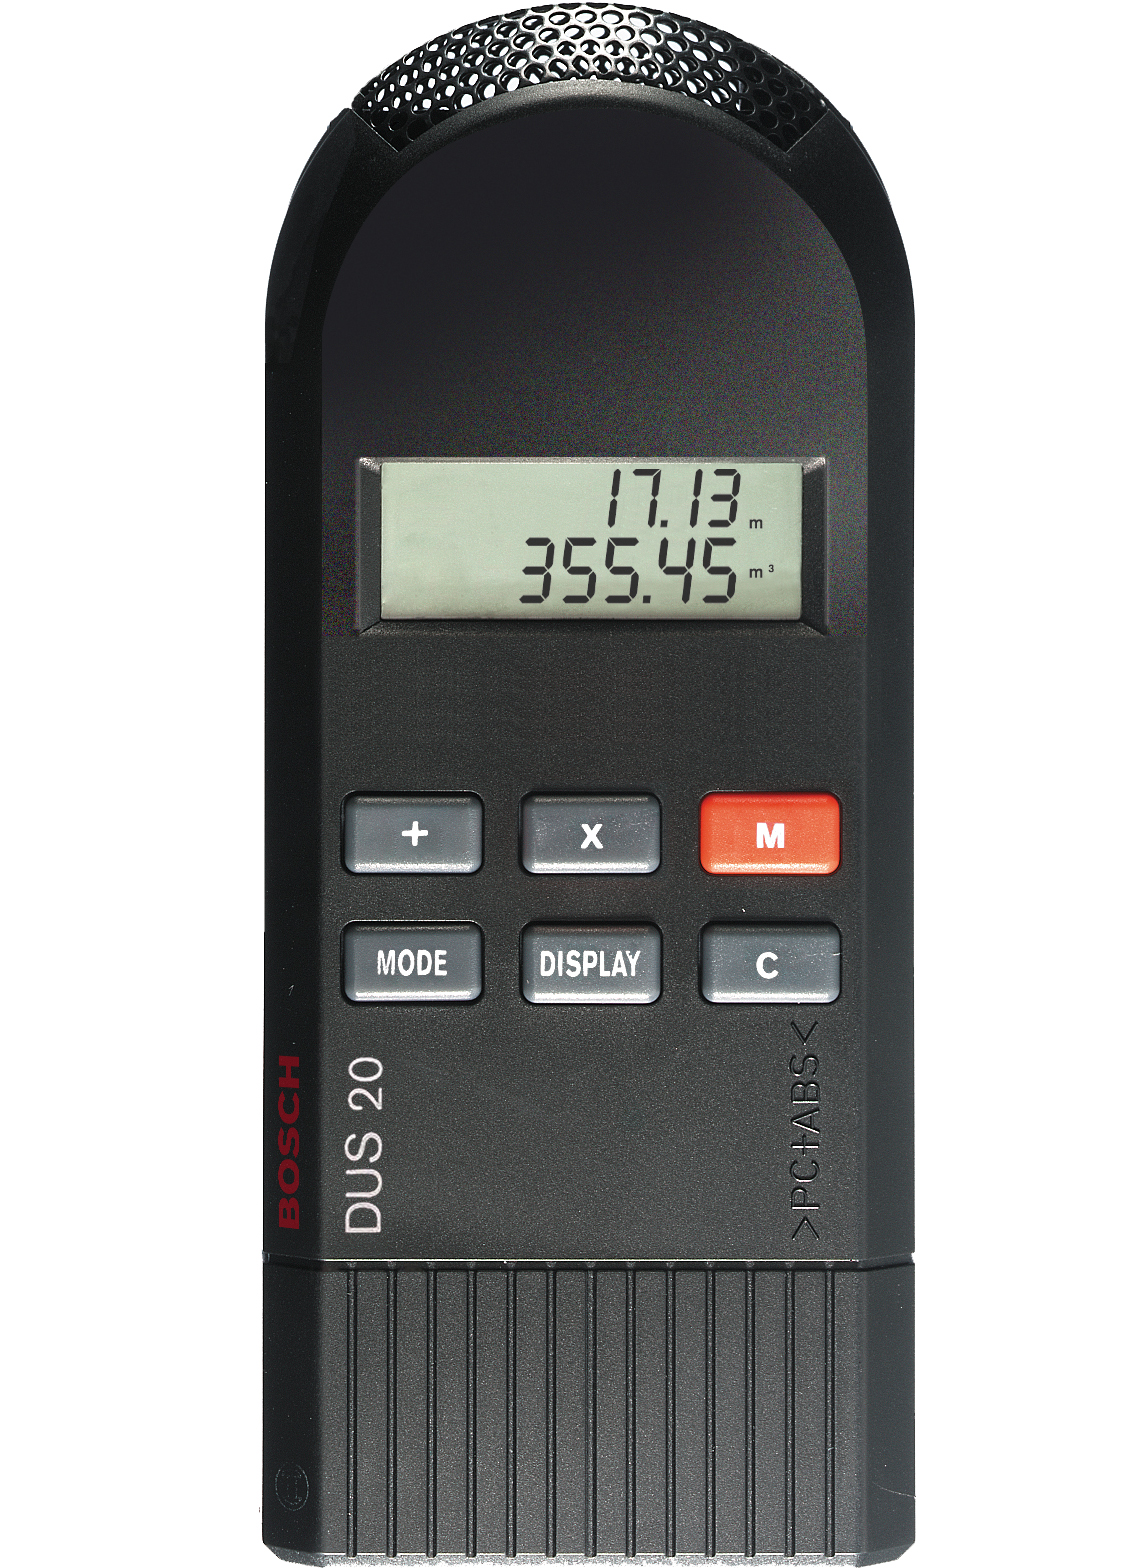 30 years of measuring tools from Bosch: DUS 20 digital ultrasonic range finder ‒ predecessor of modern range finders